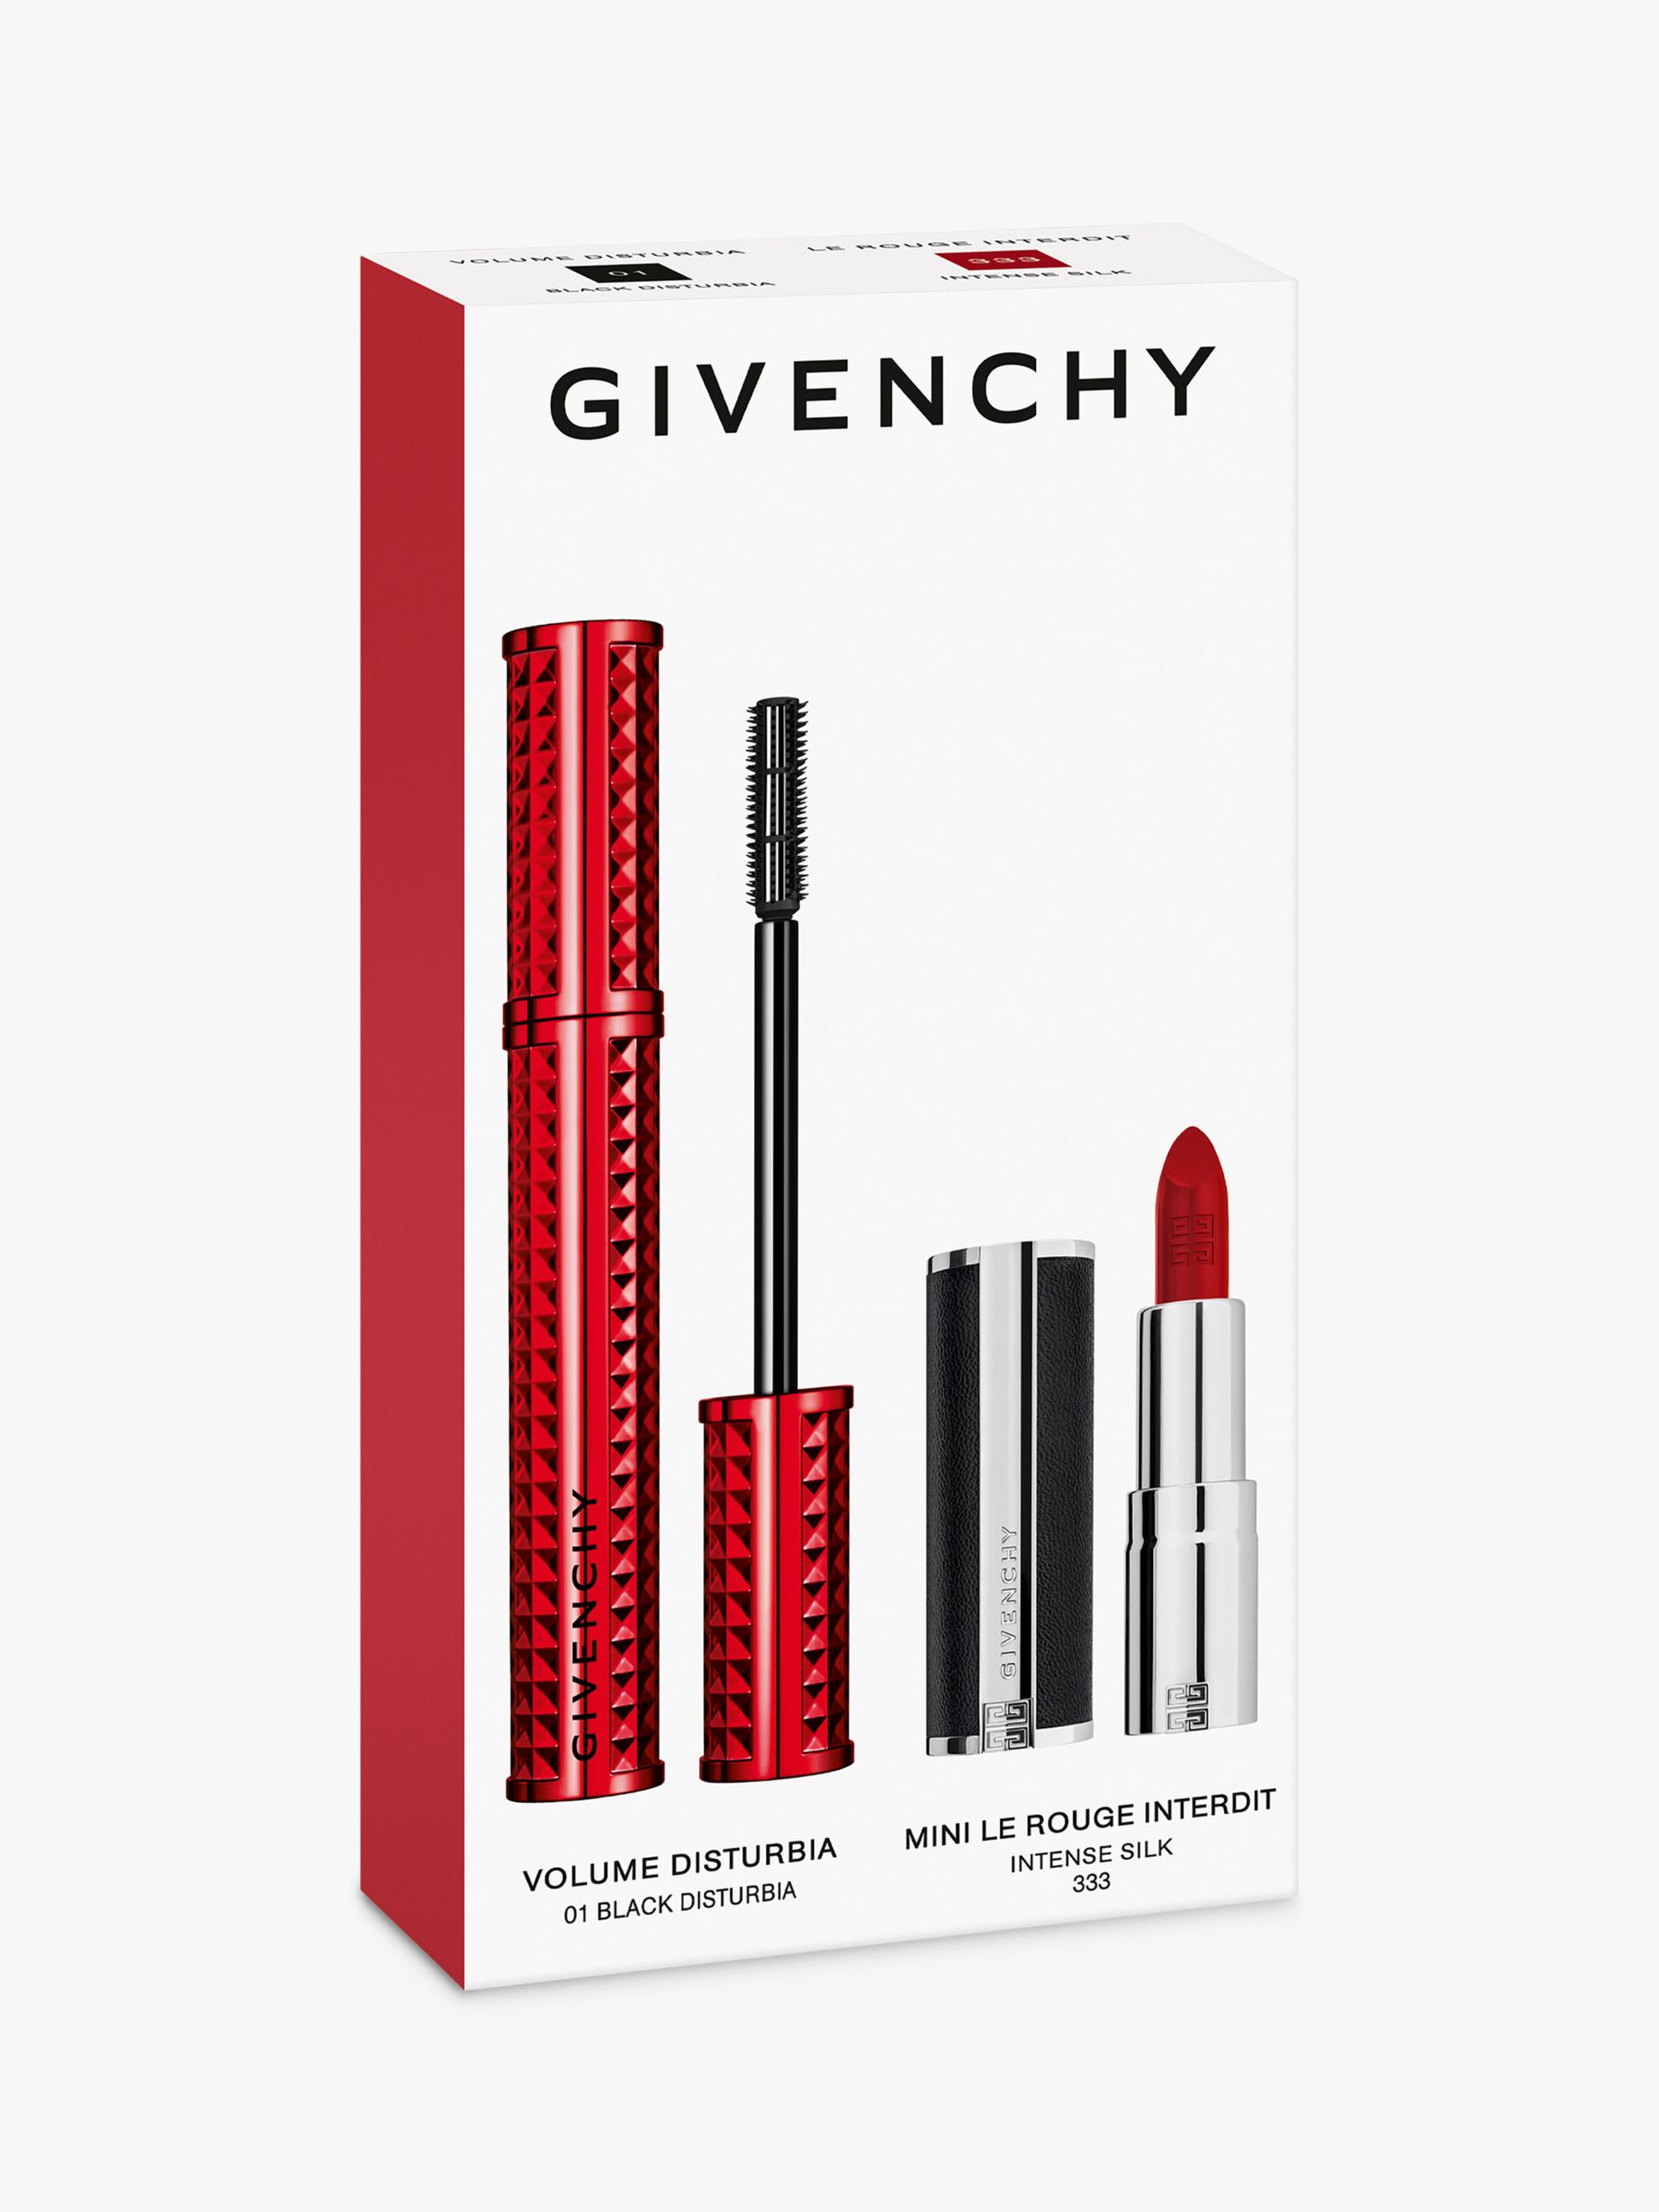 Givenchy Volume Disturbia Mascara Makeup Gift Set